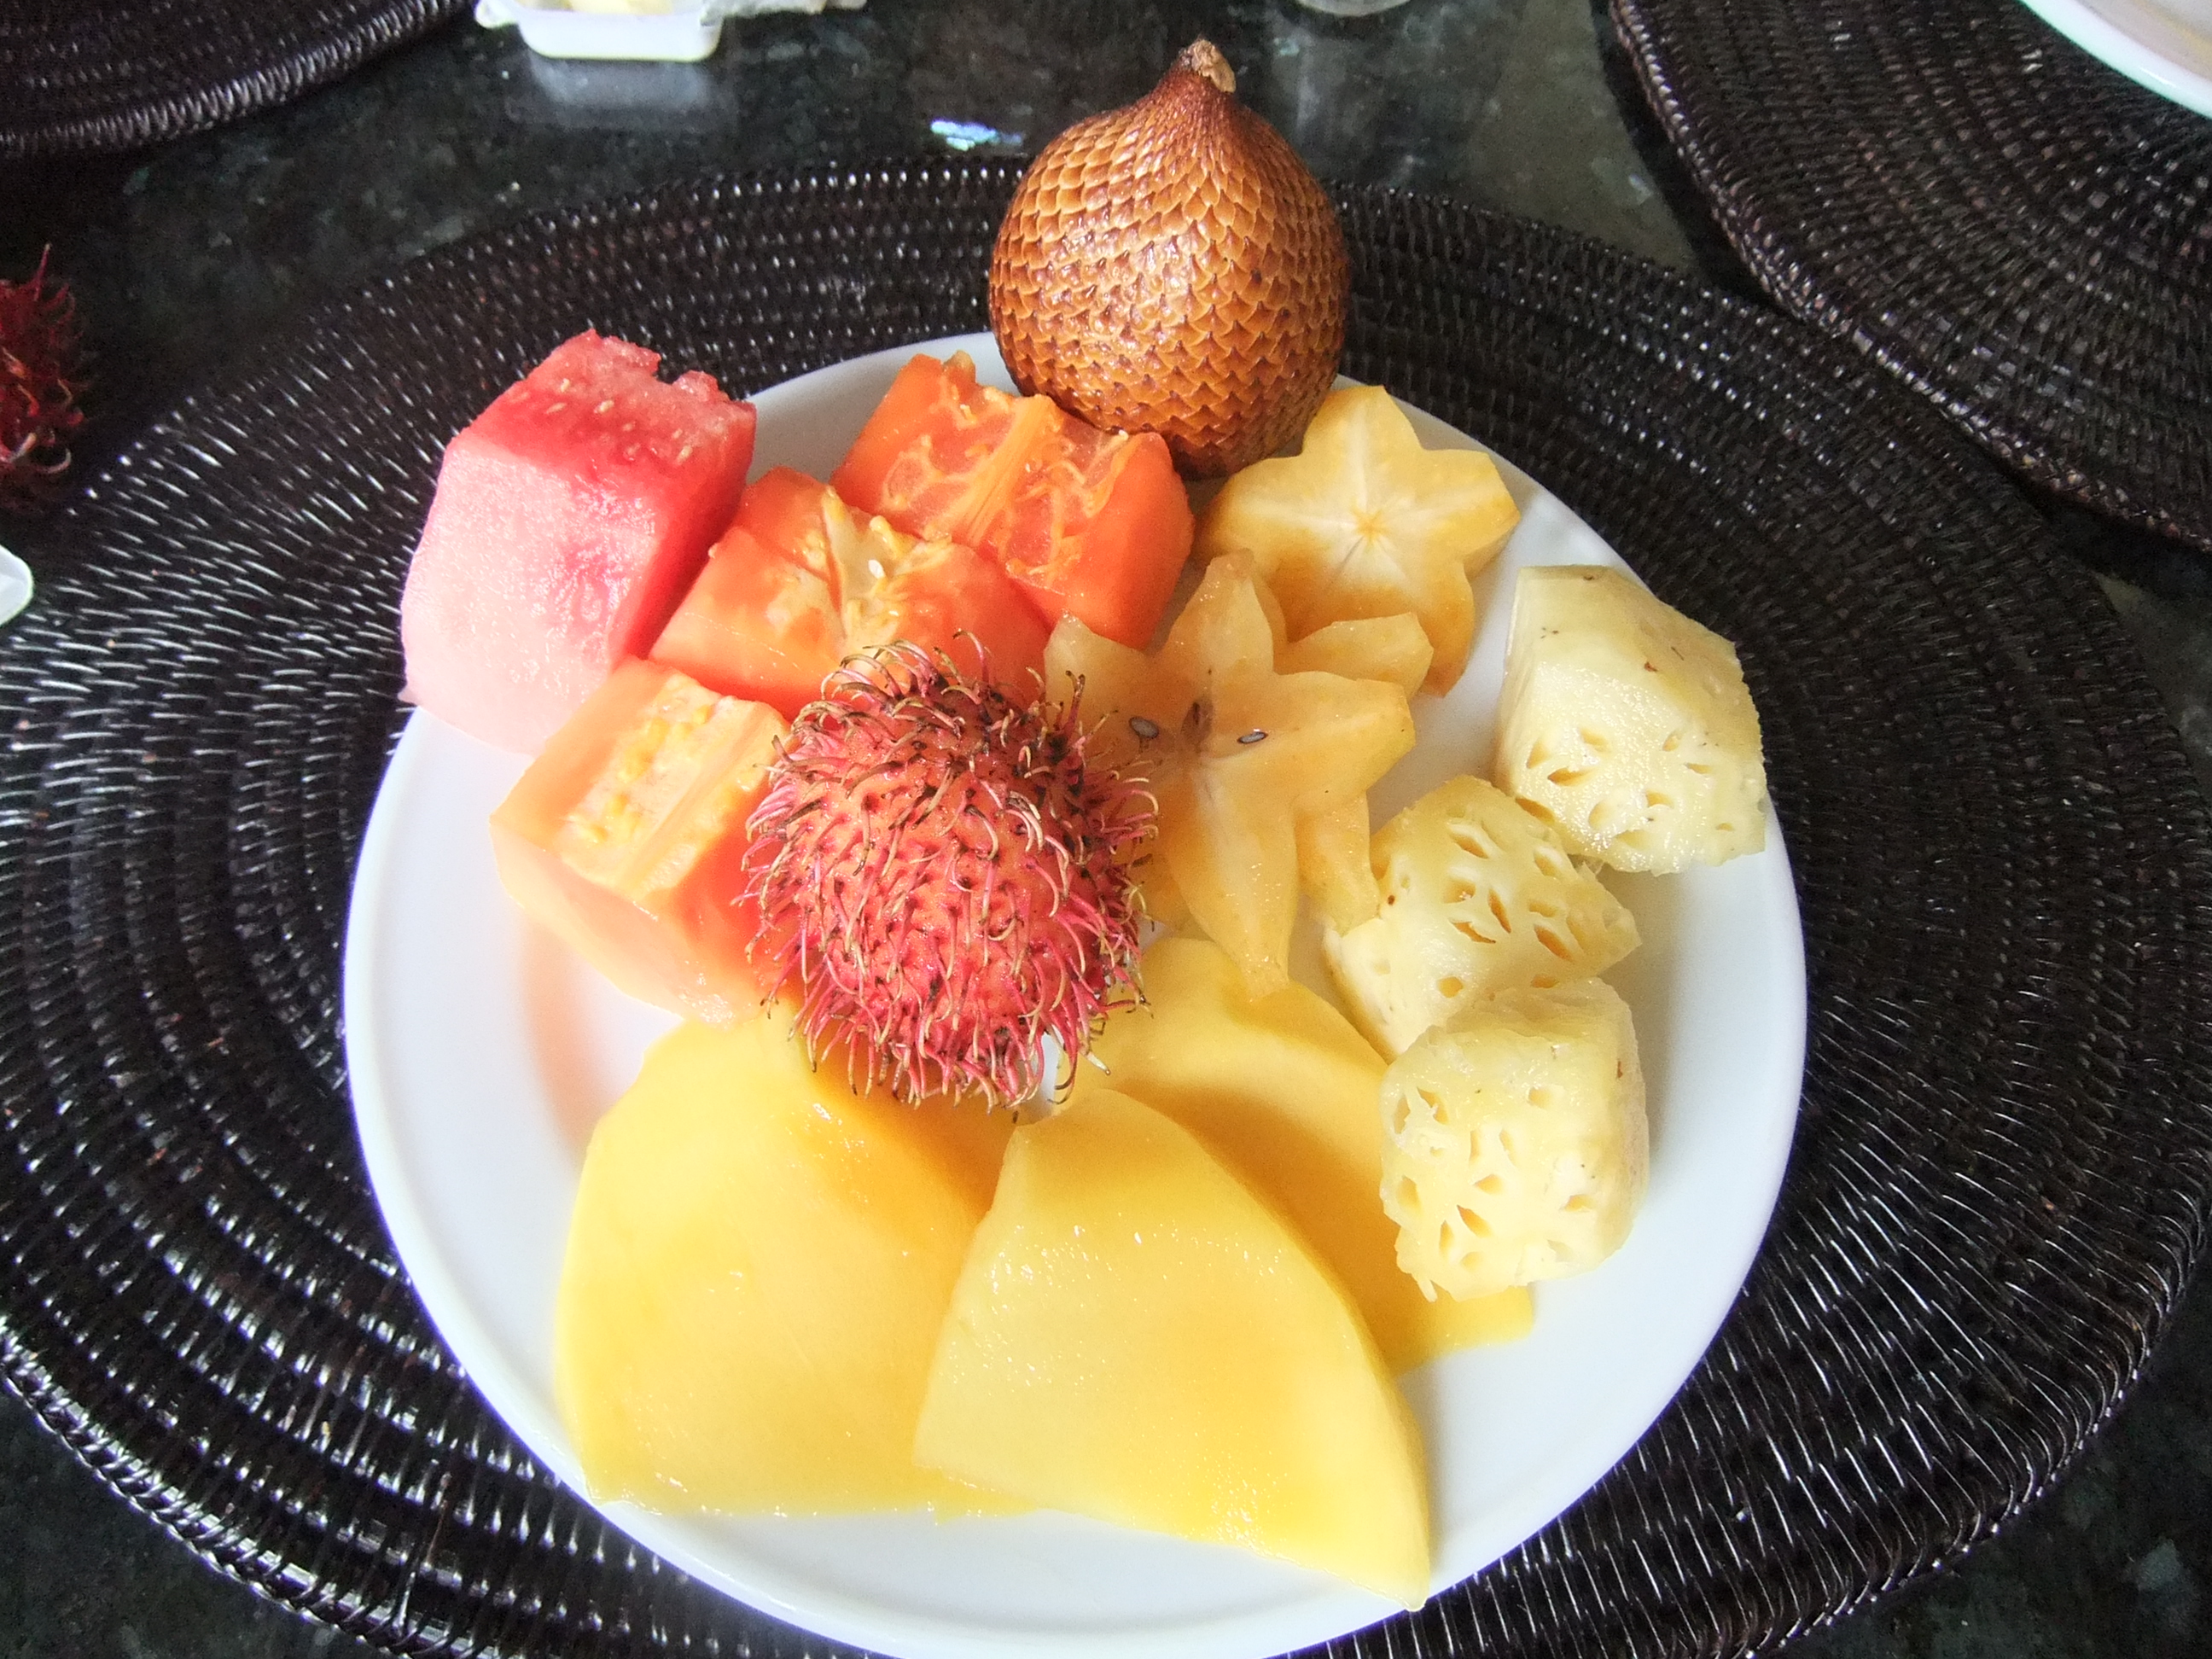 Rambutan Fruit: A Tropical Delight With Health Benefits